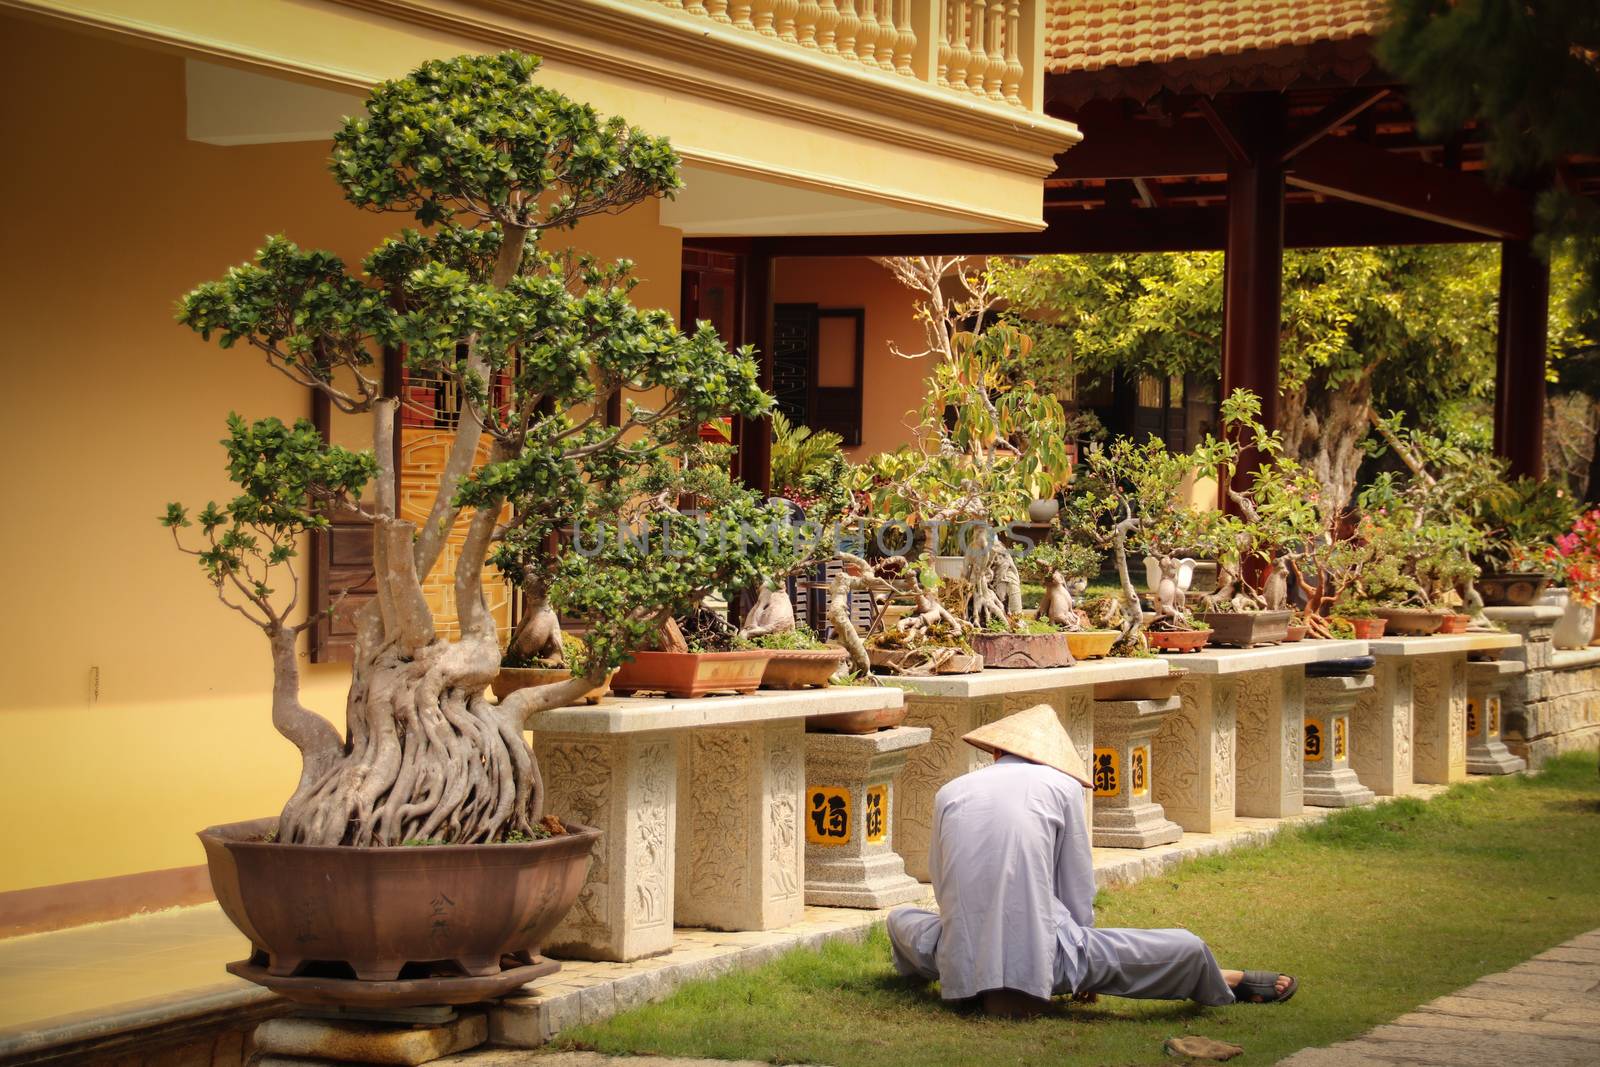 Monk in the Zen Garden of Linh Son Pagoda by Sonnet15